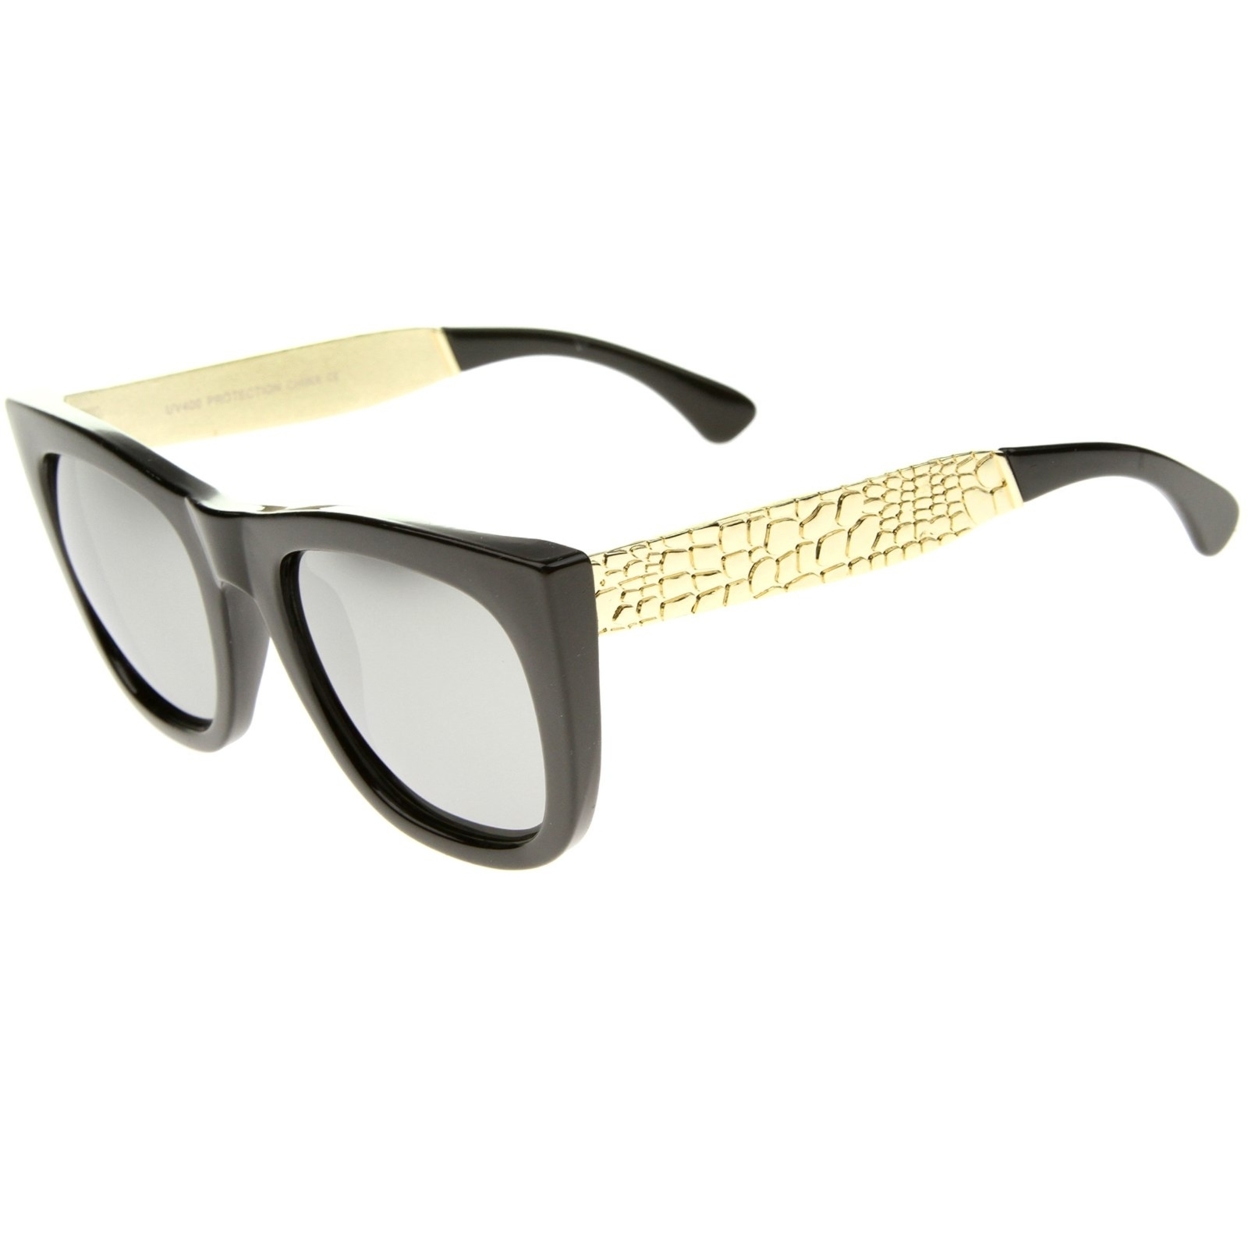 High Fashion Alligator Metal Temple Mirrored Lens Flat Top Sunglasses - Black-Gold / Pink Mirror